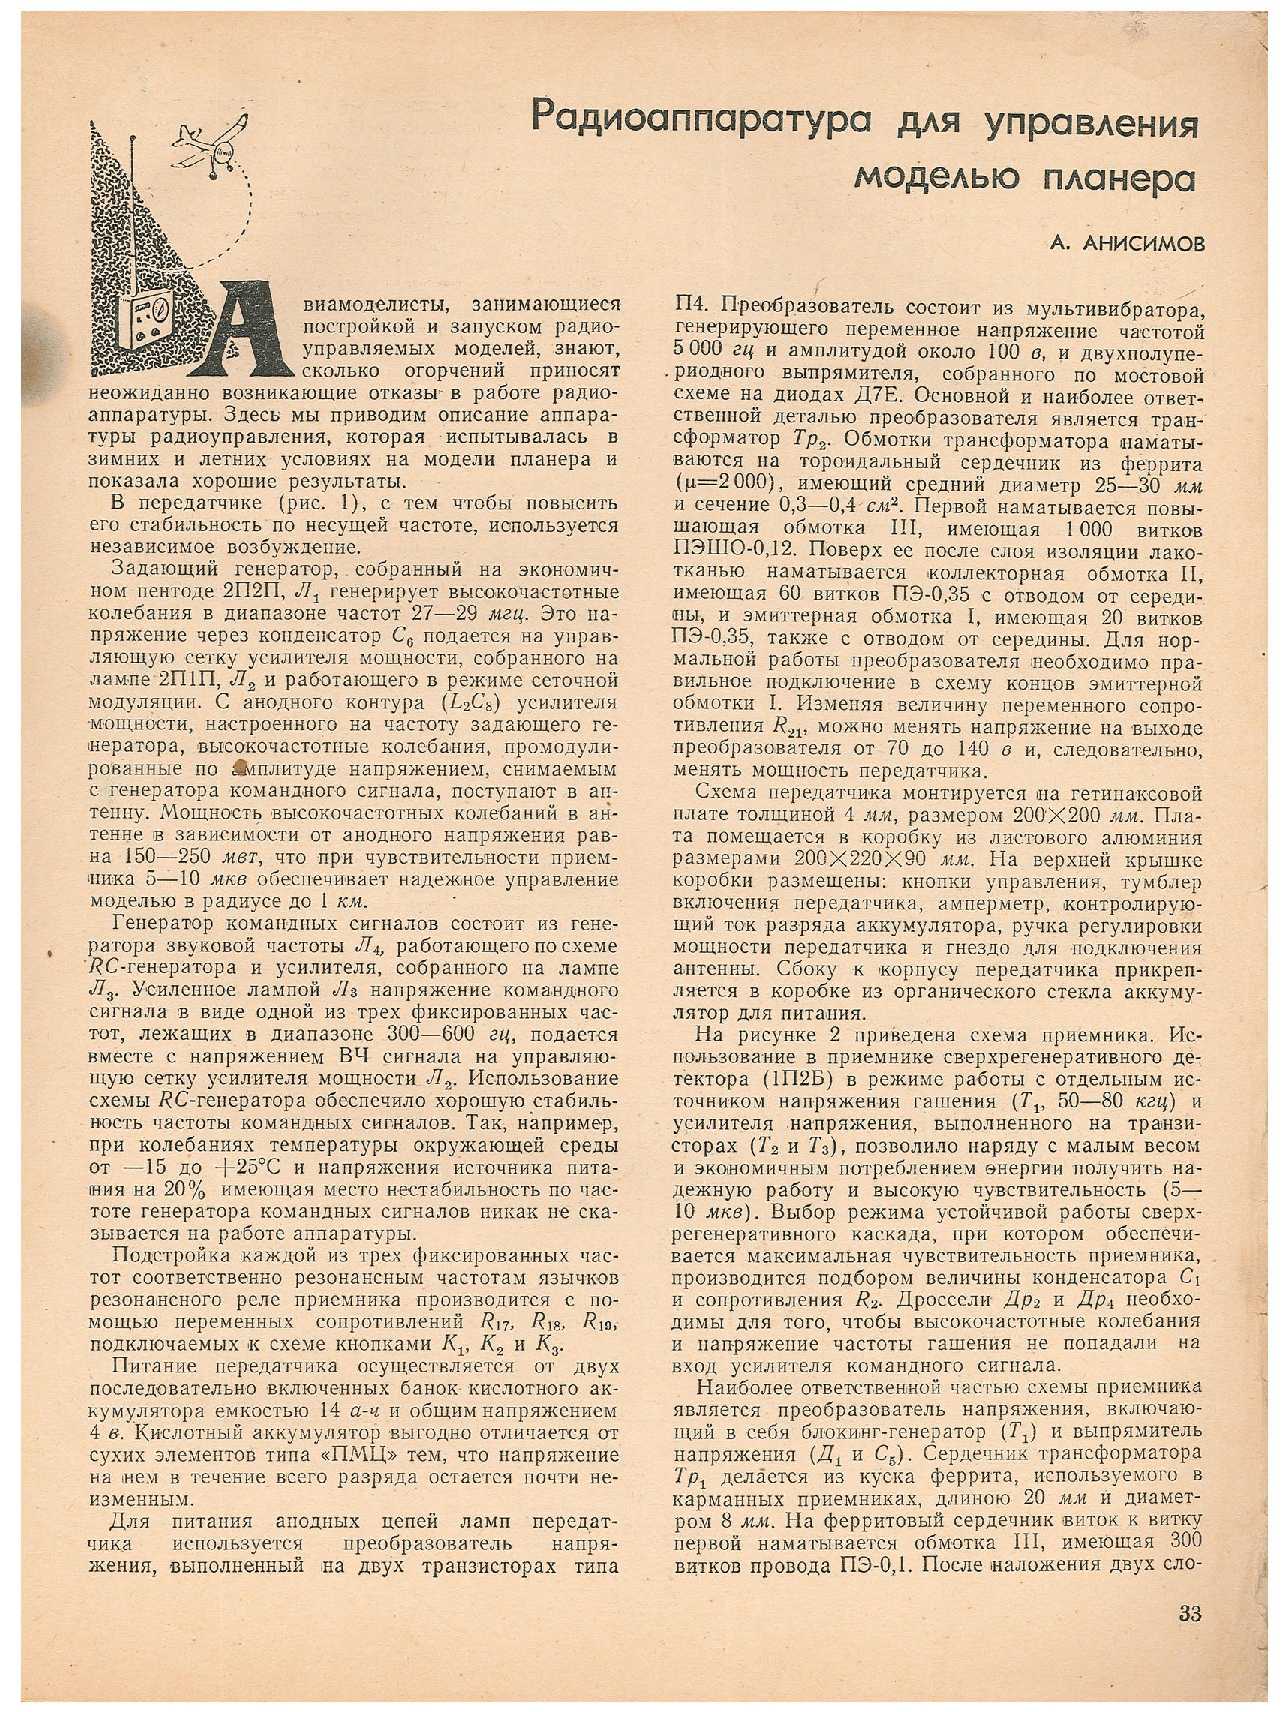 ЮМК 1, 1962, 33 c.